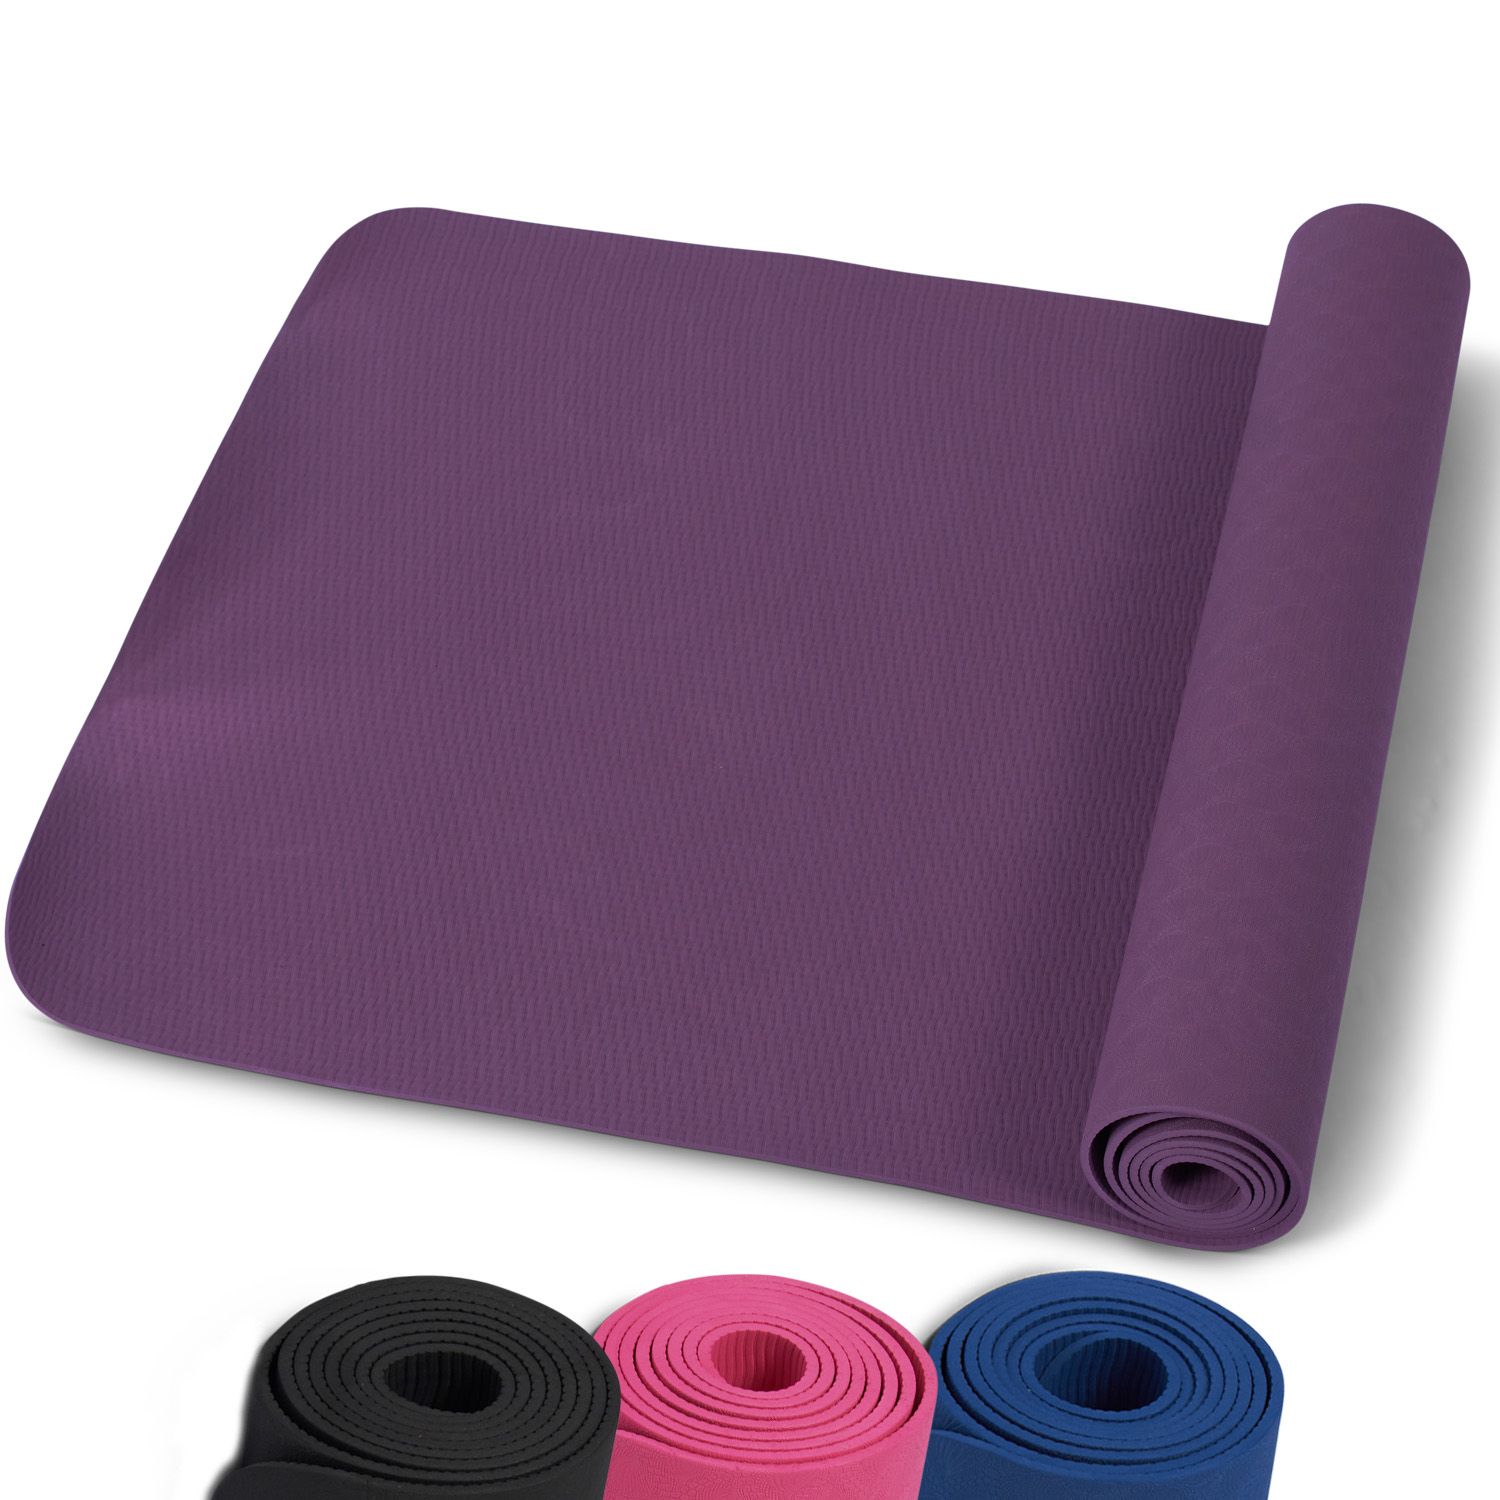 home gym equipment yoga mat purple all colors